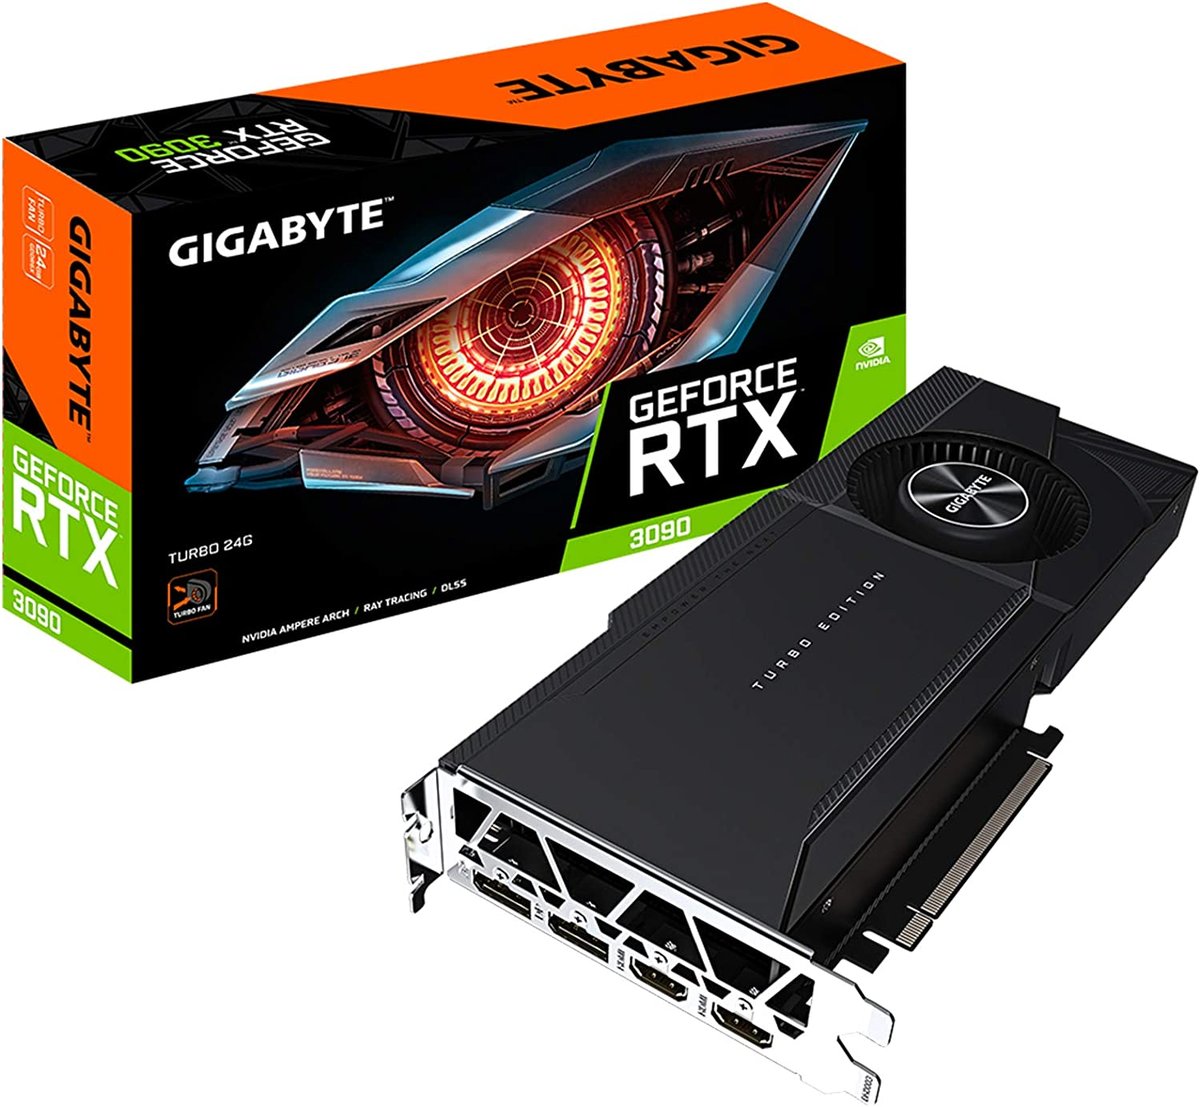 Gigabyte GeForce RTX 3090 TURBO 24GB